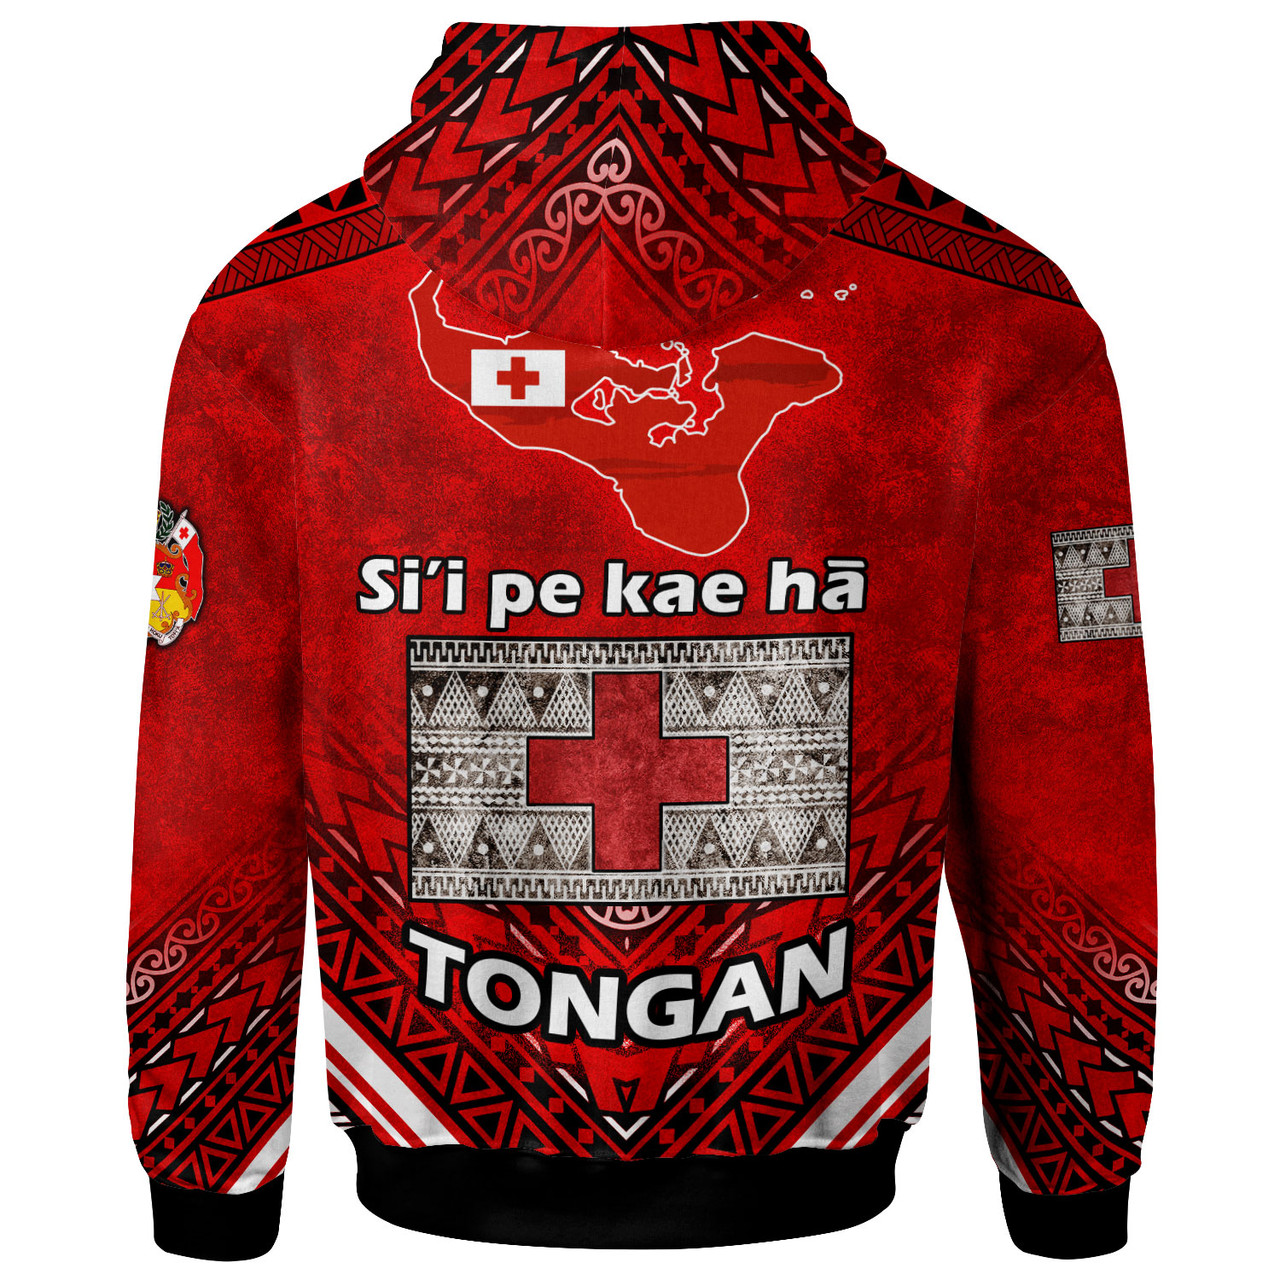 Tonga Hoodie - Custom Awesome Tongan Patterns Hoodie